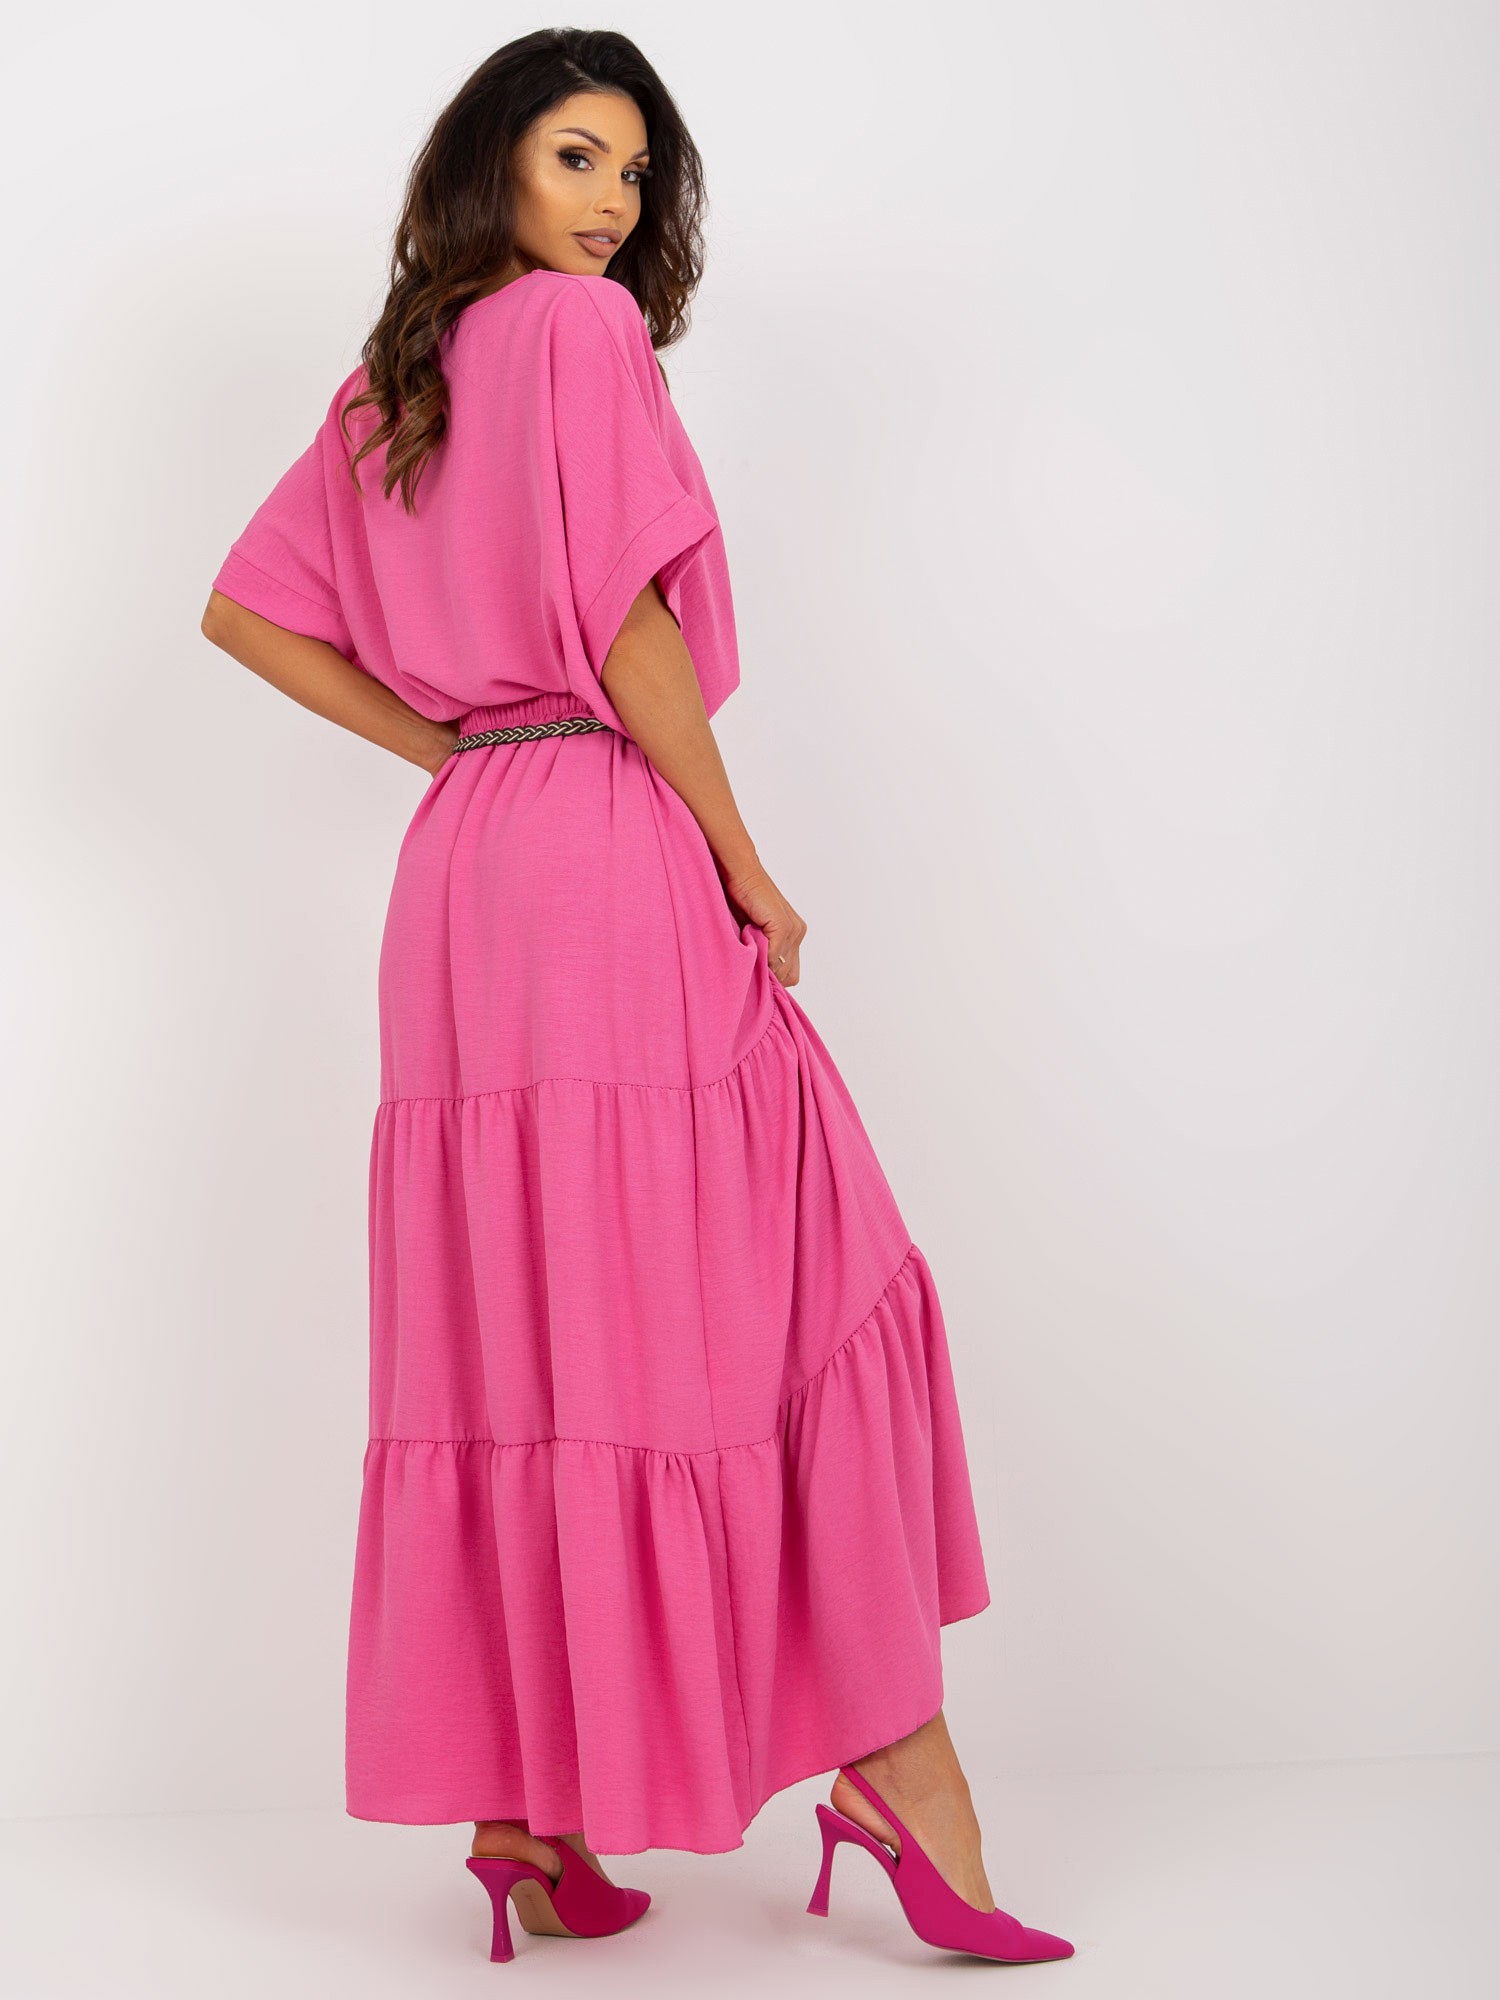 Dark pink summer maxi skirt with ruffle